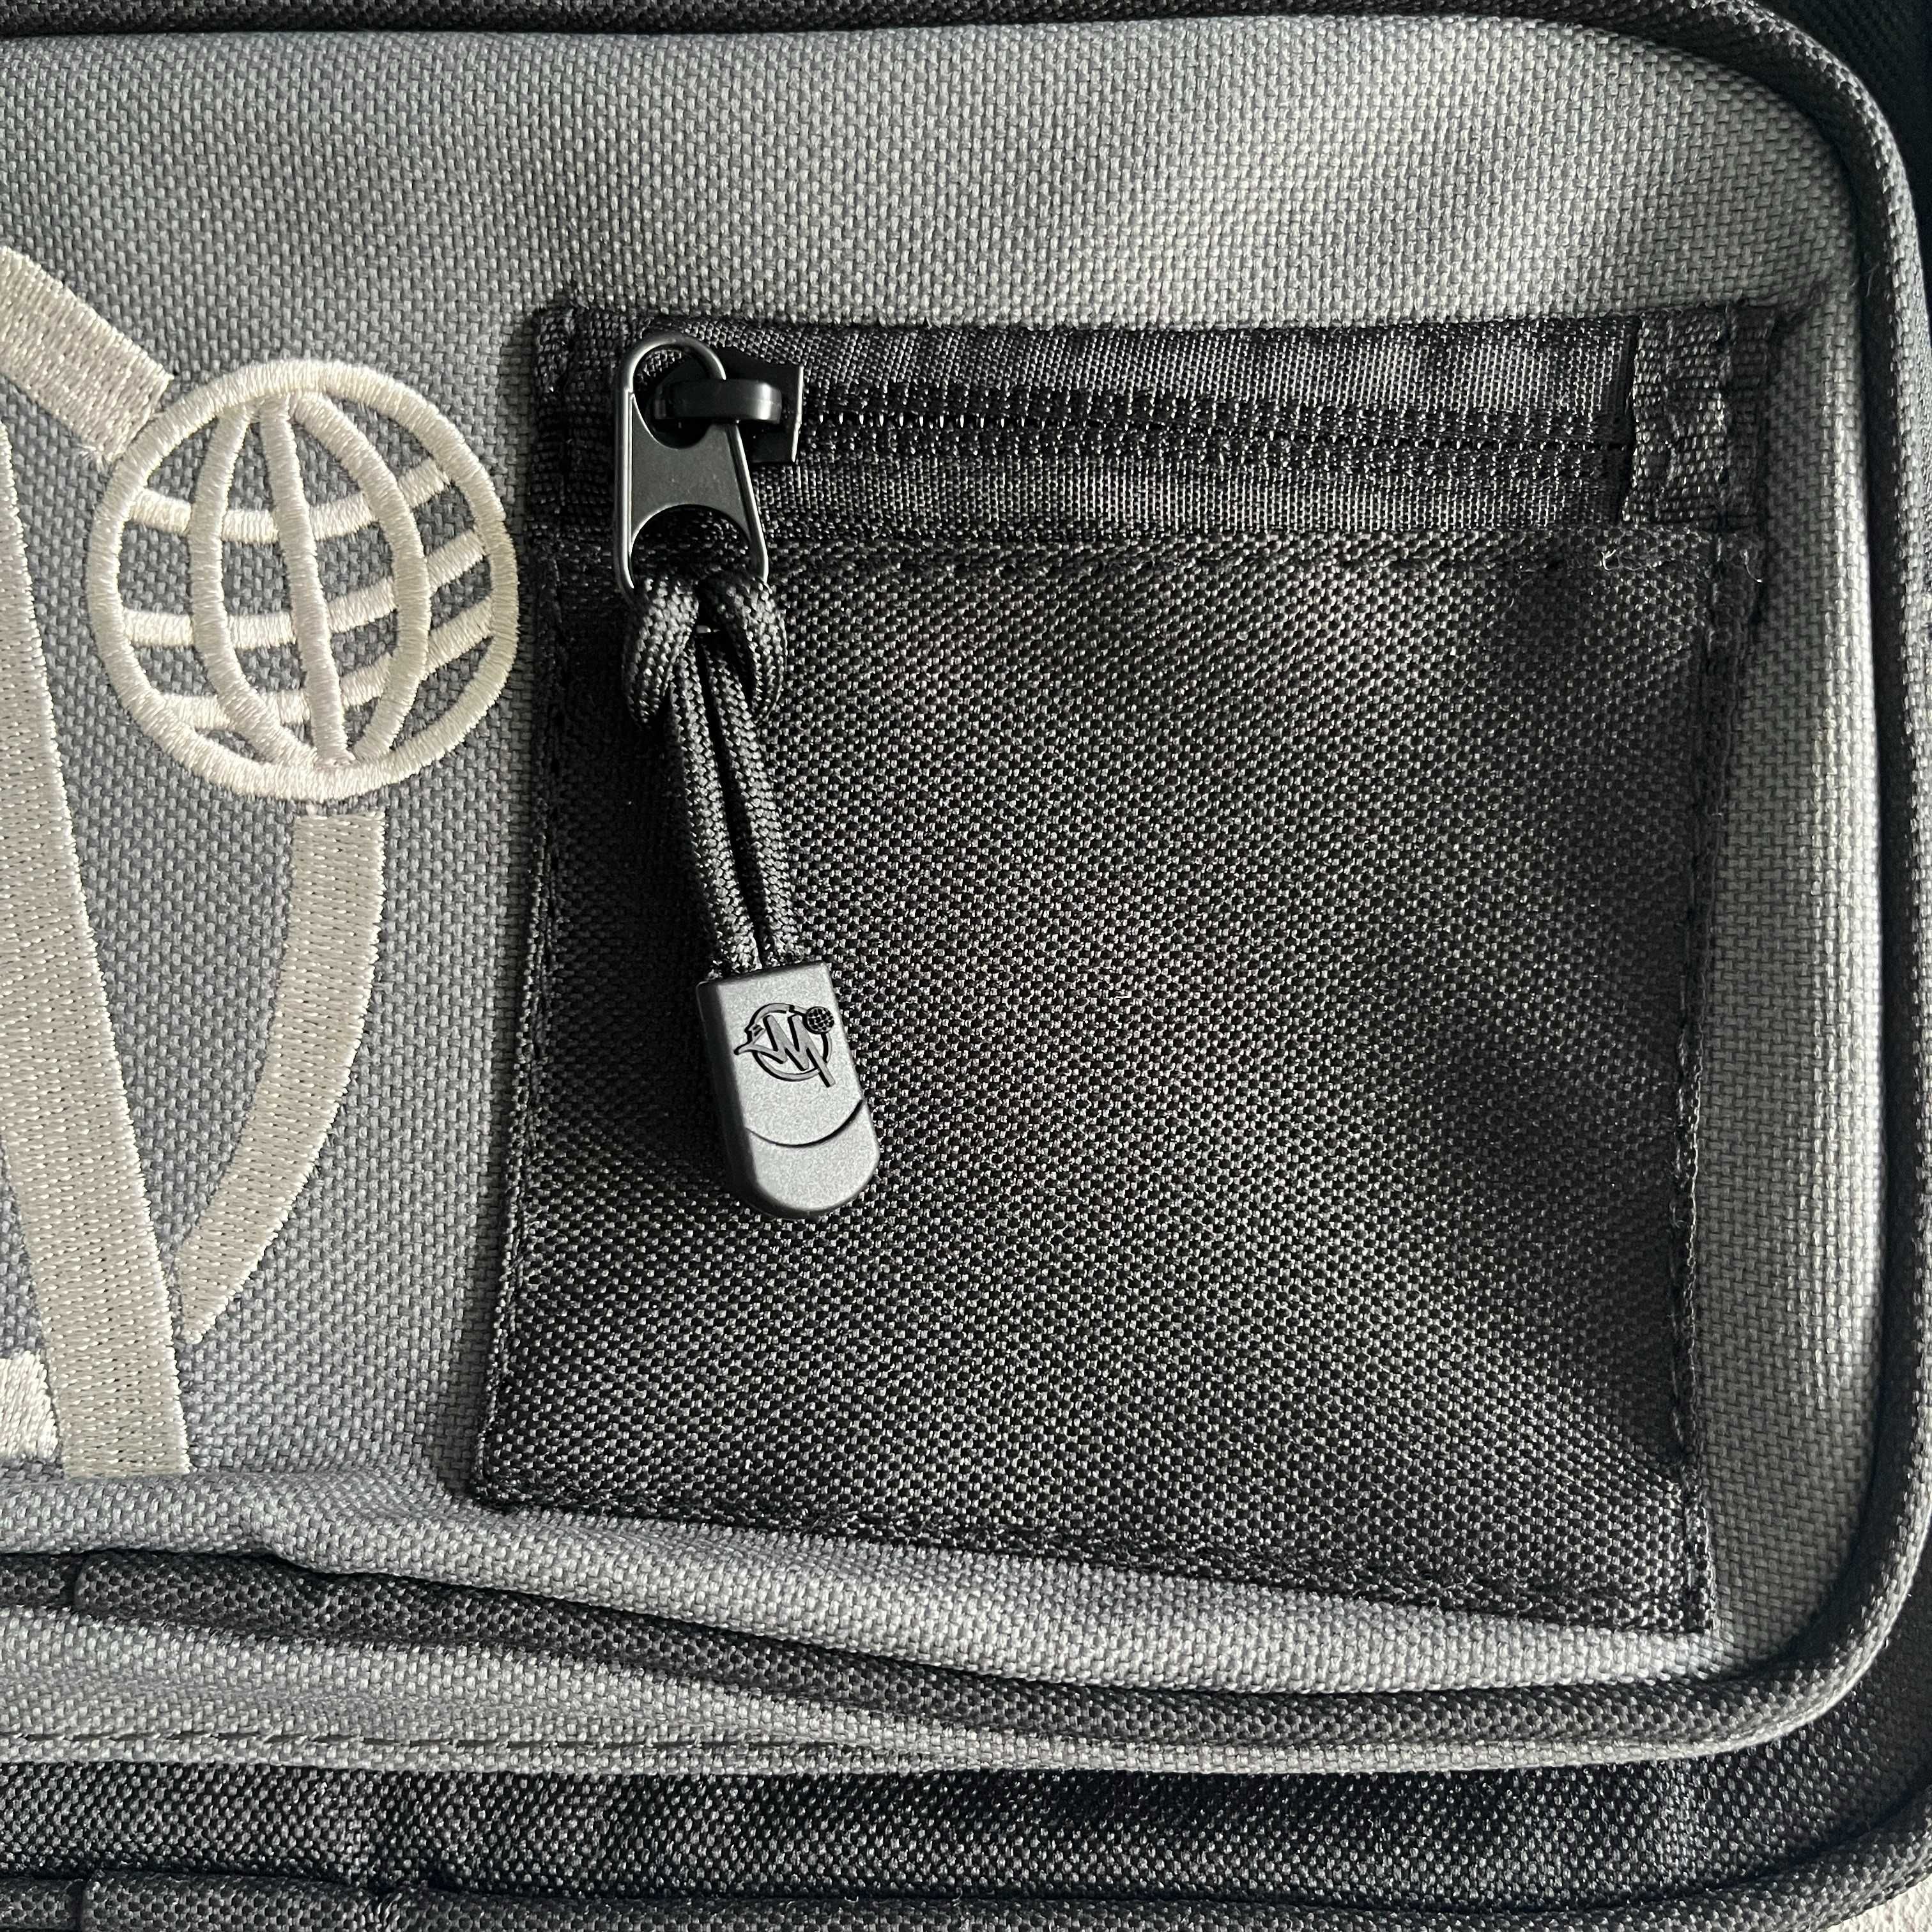 Сумка мессенджер Minus Two gray and black color matching satchel